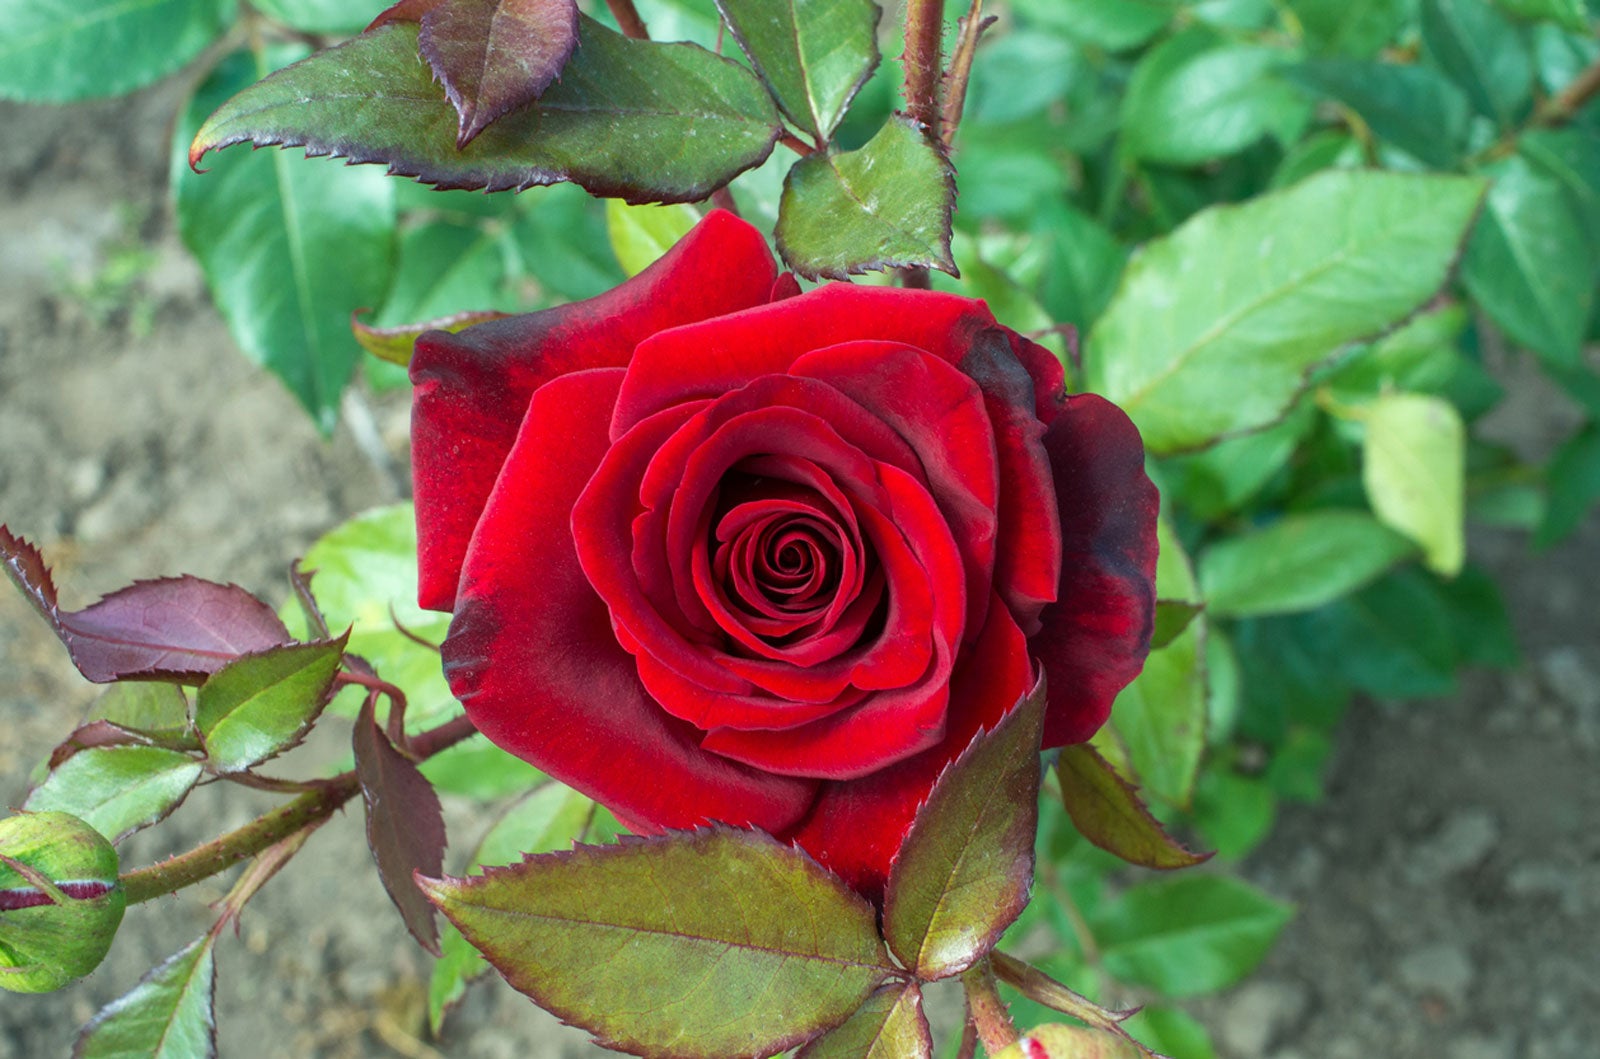 16 Types of Roses - Most Popular Rose Varieties